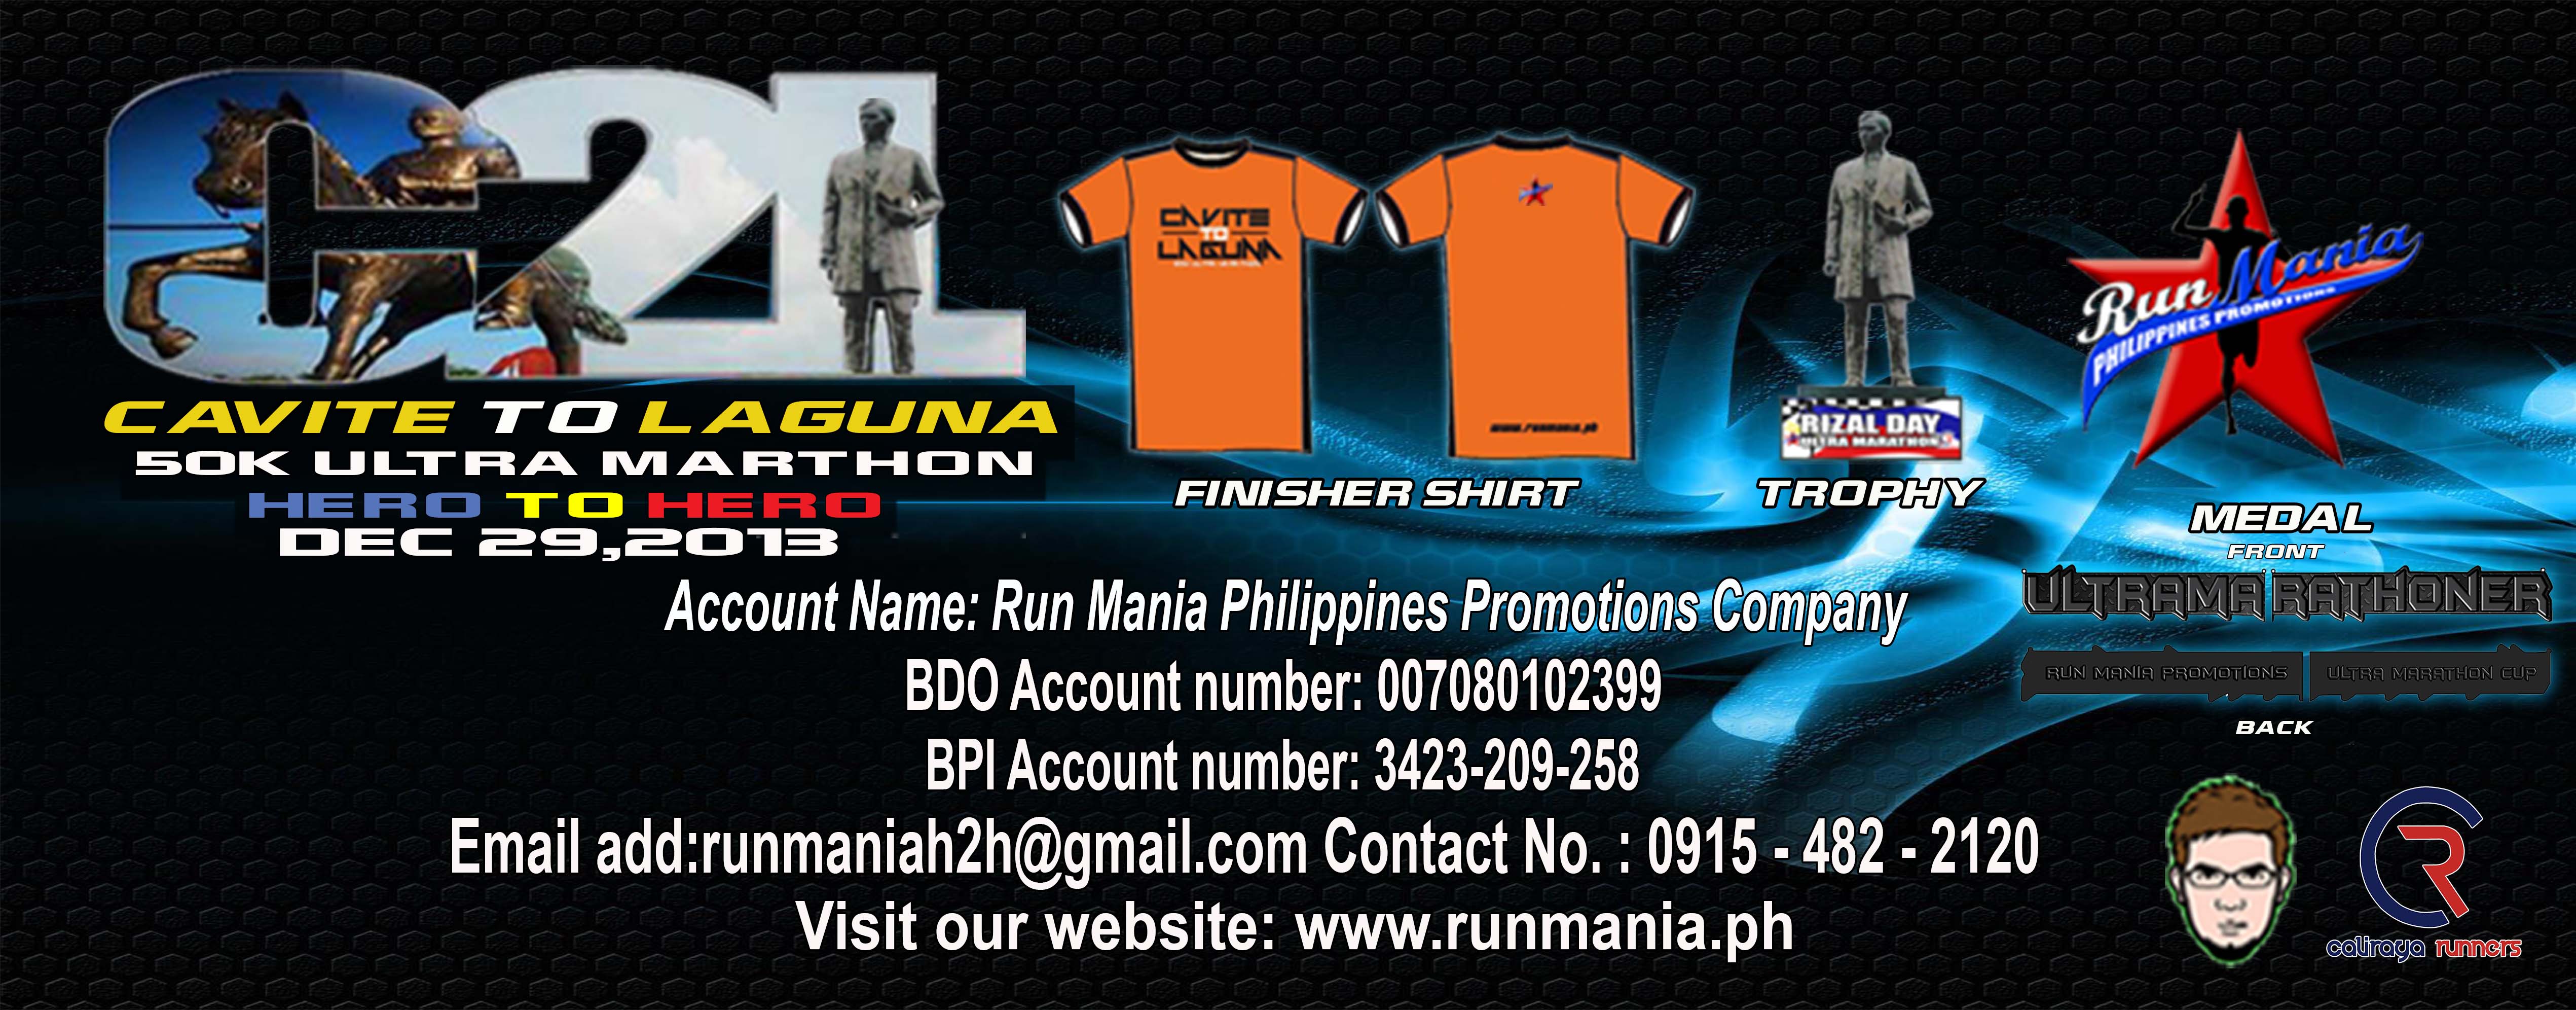 cavite-to-laguna-ultramarathon-2013-poster